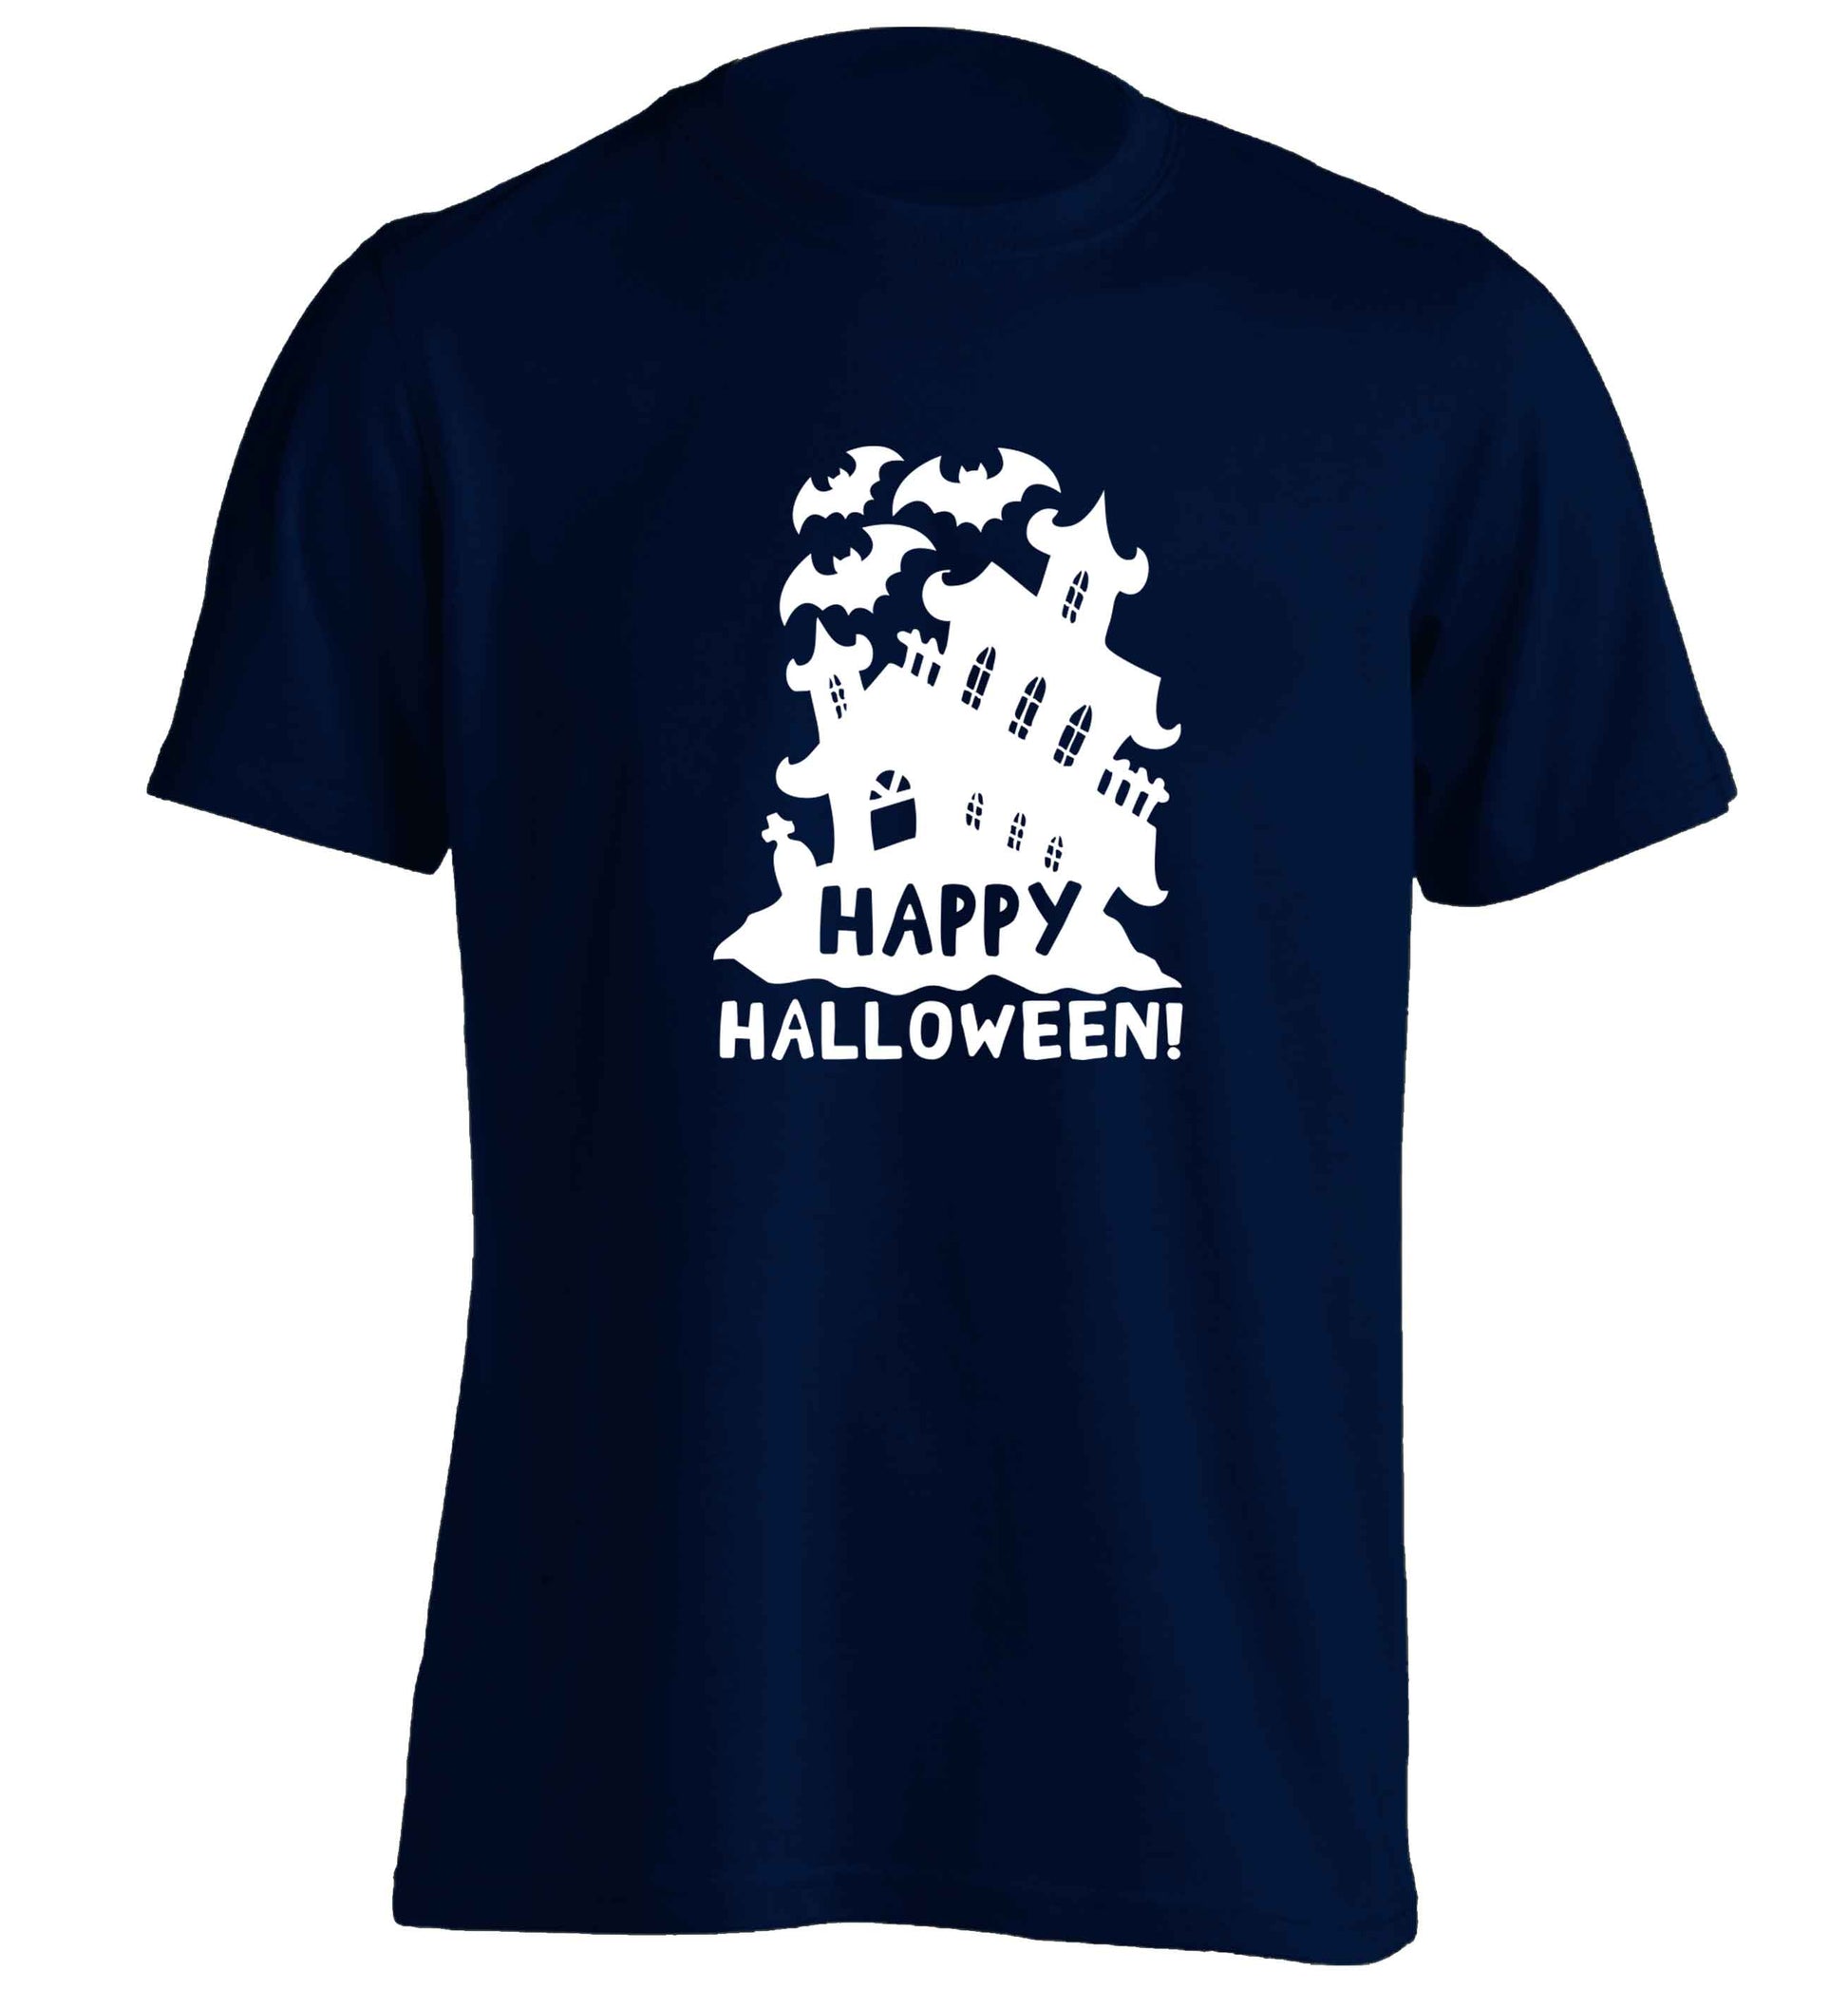 Happy halloween - haunted house adults unisex navy Tshirt 2XL